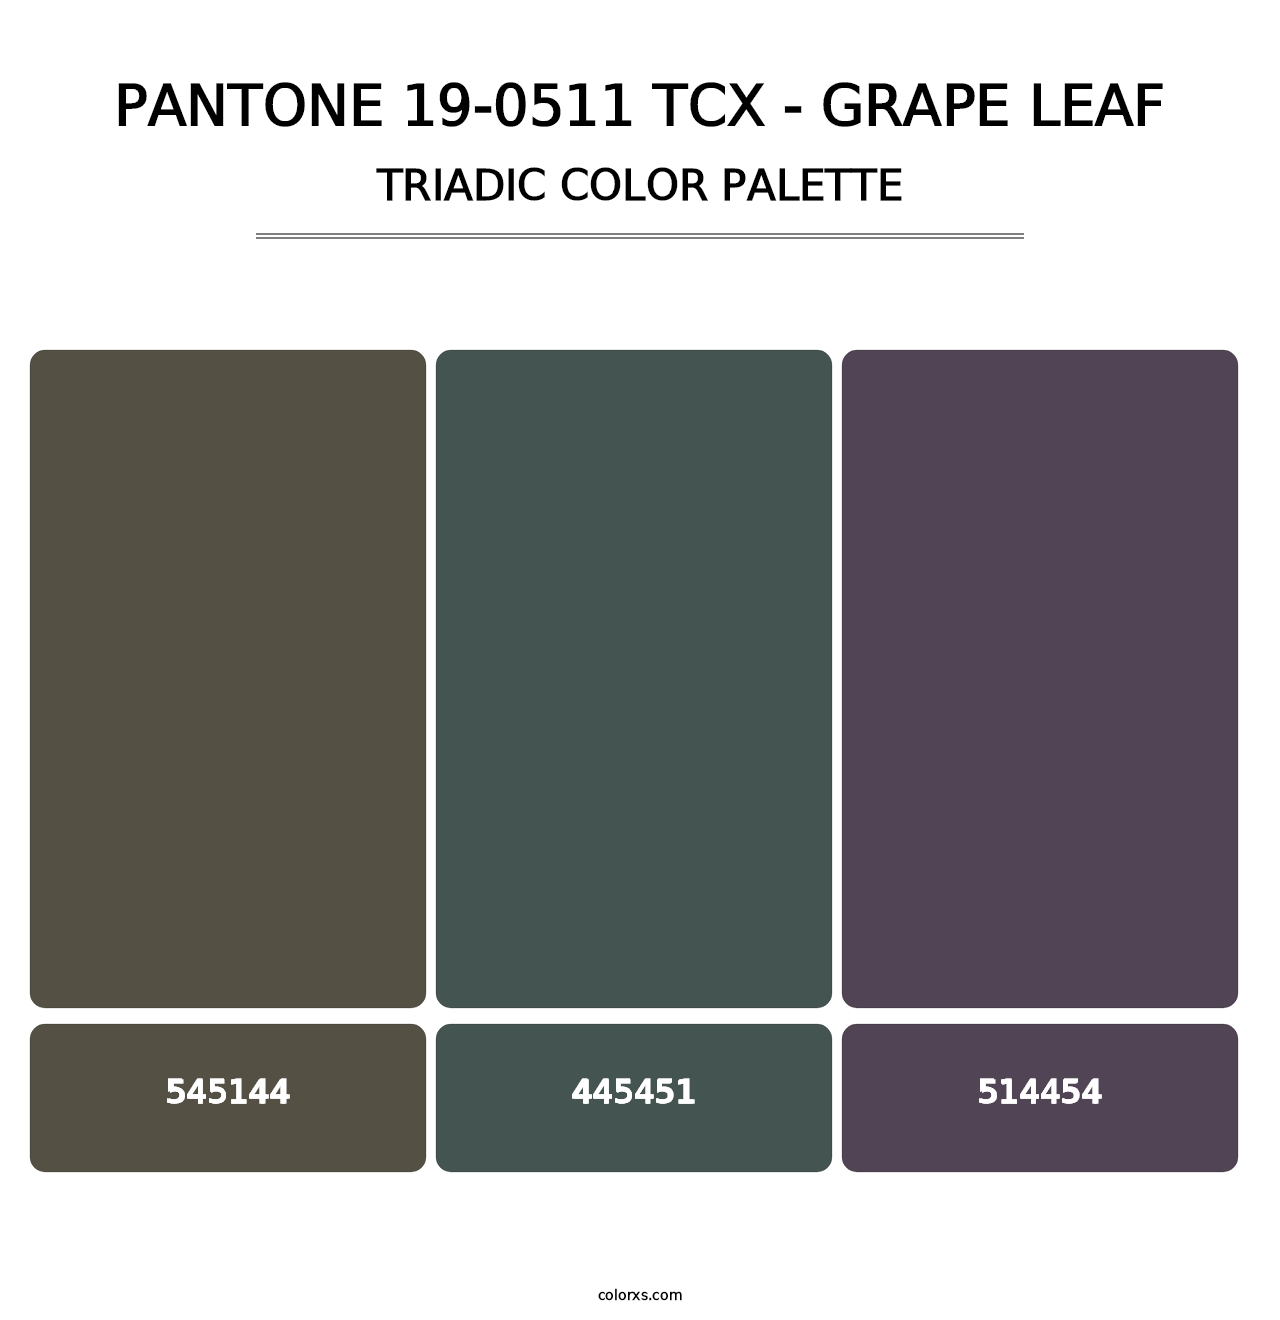 PANTONE 19-0511 TCX - Grape Leaf - Triadic Color Palette